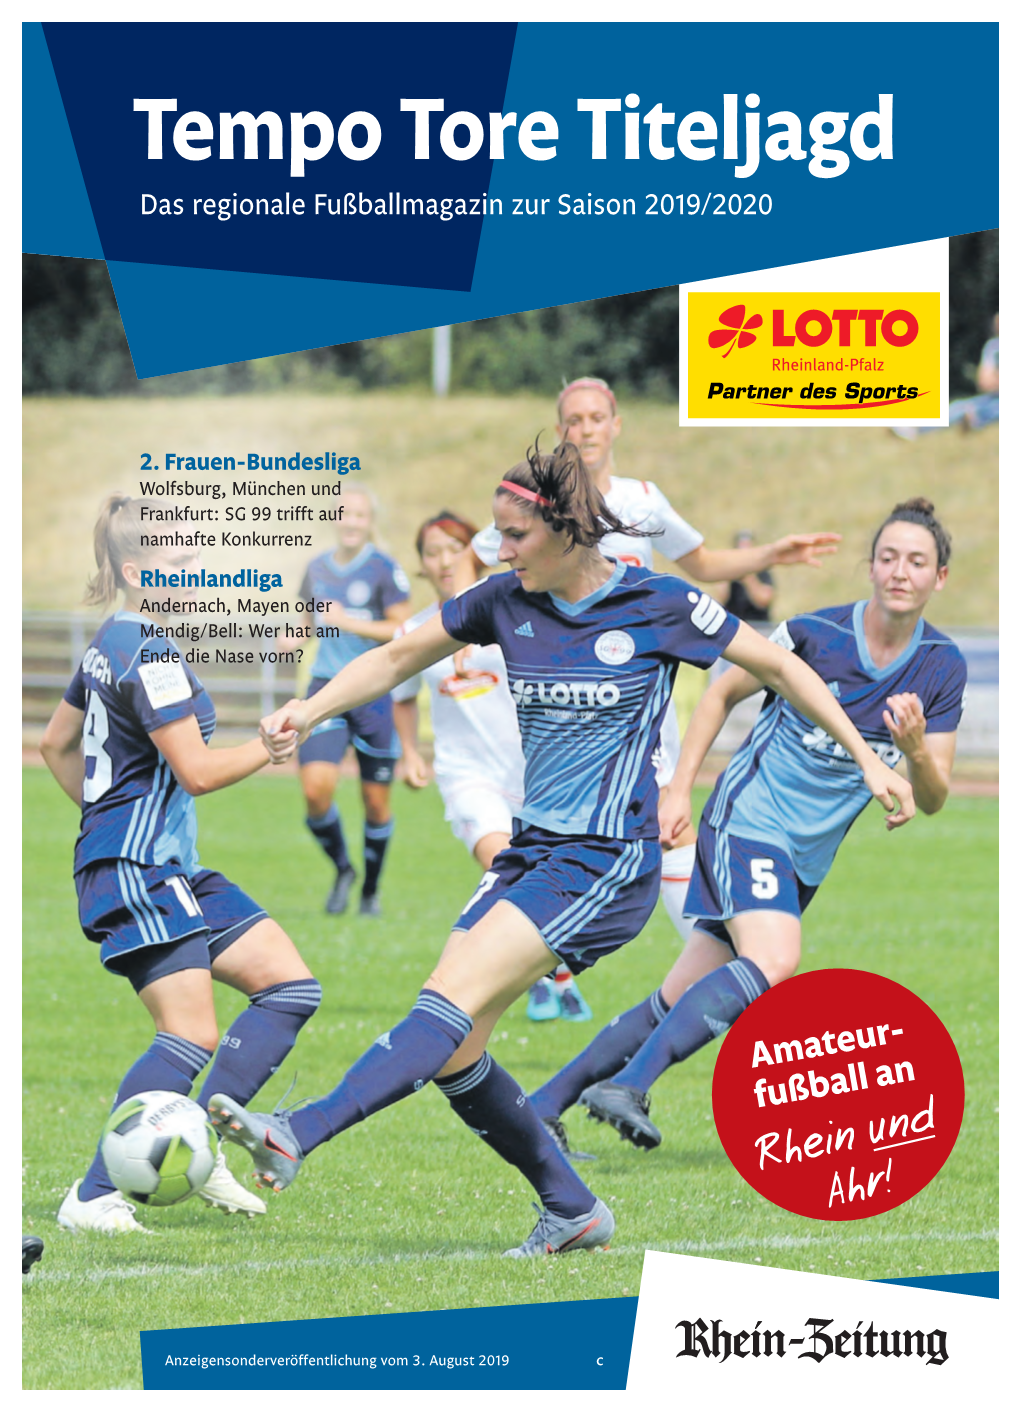 Tempo Tore Titeljagd Das Regionale Fußballmagazin Zur Saison 2019/2020